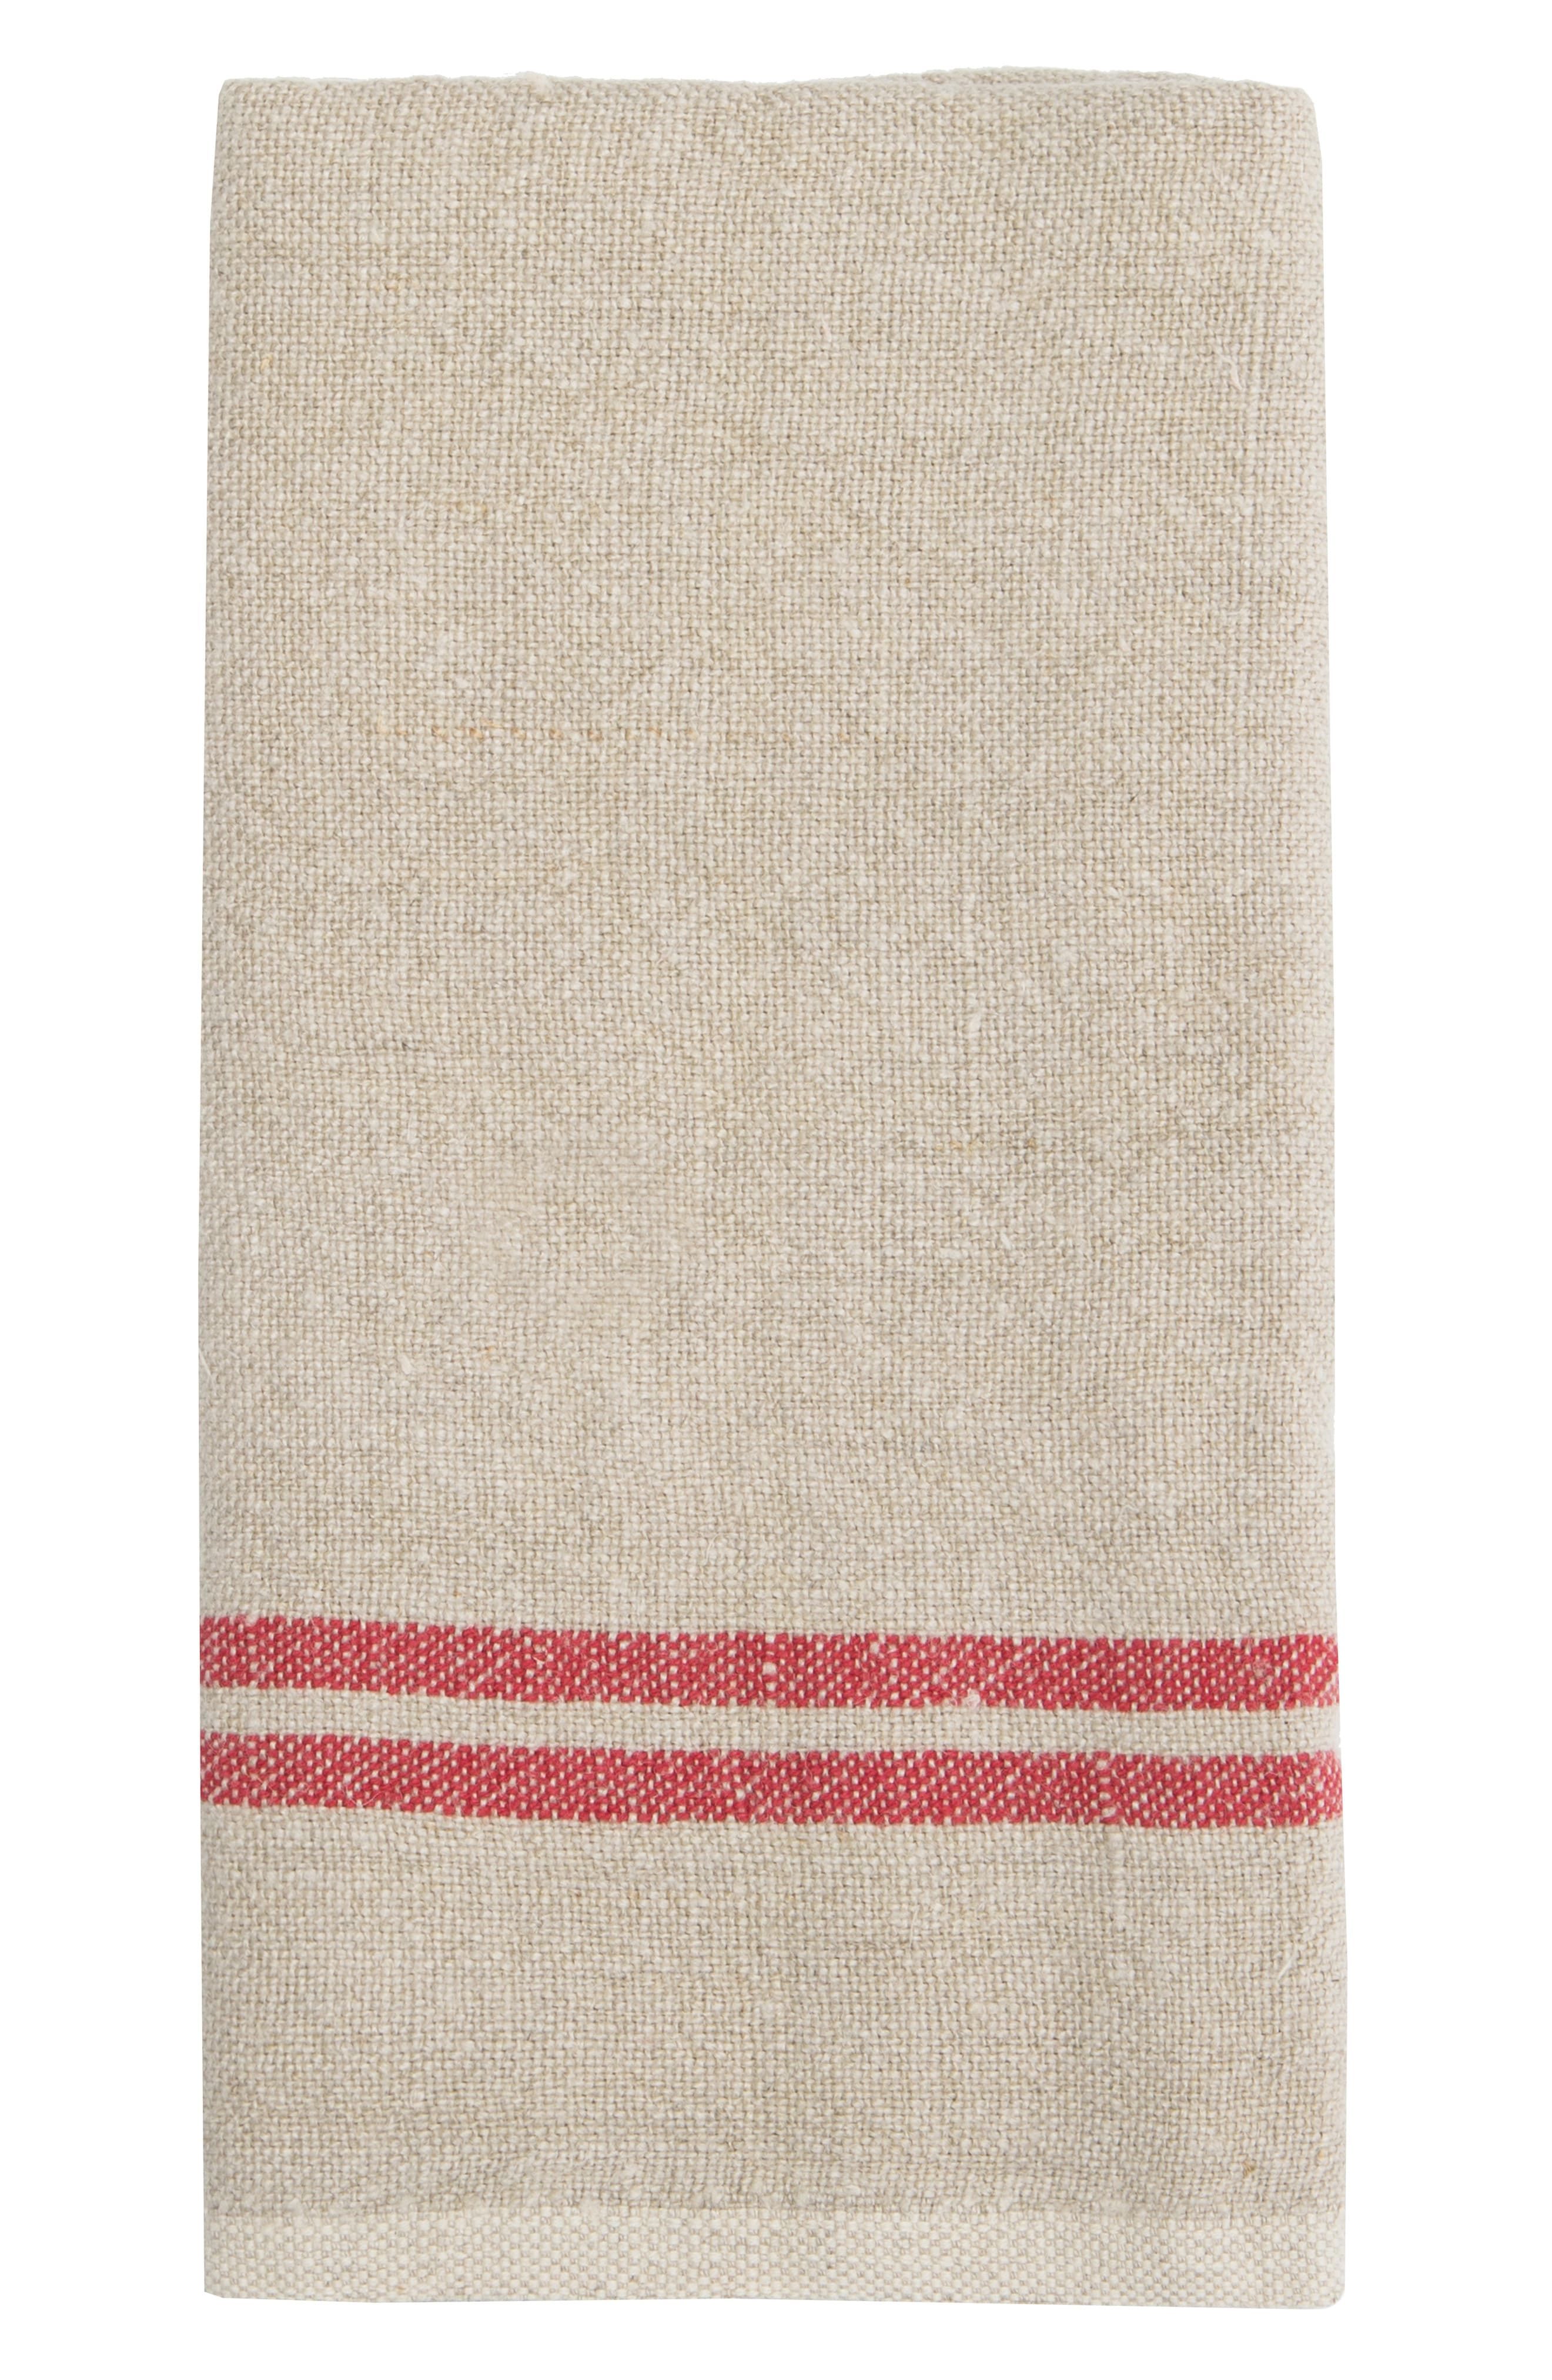 Caravan Vintage Linen Tea Towels, Set of 2 